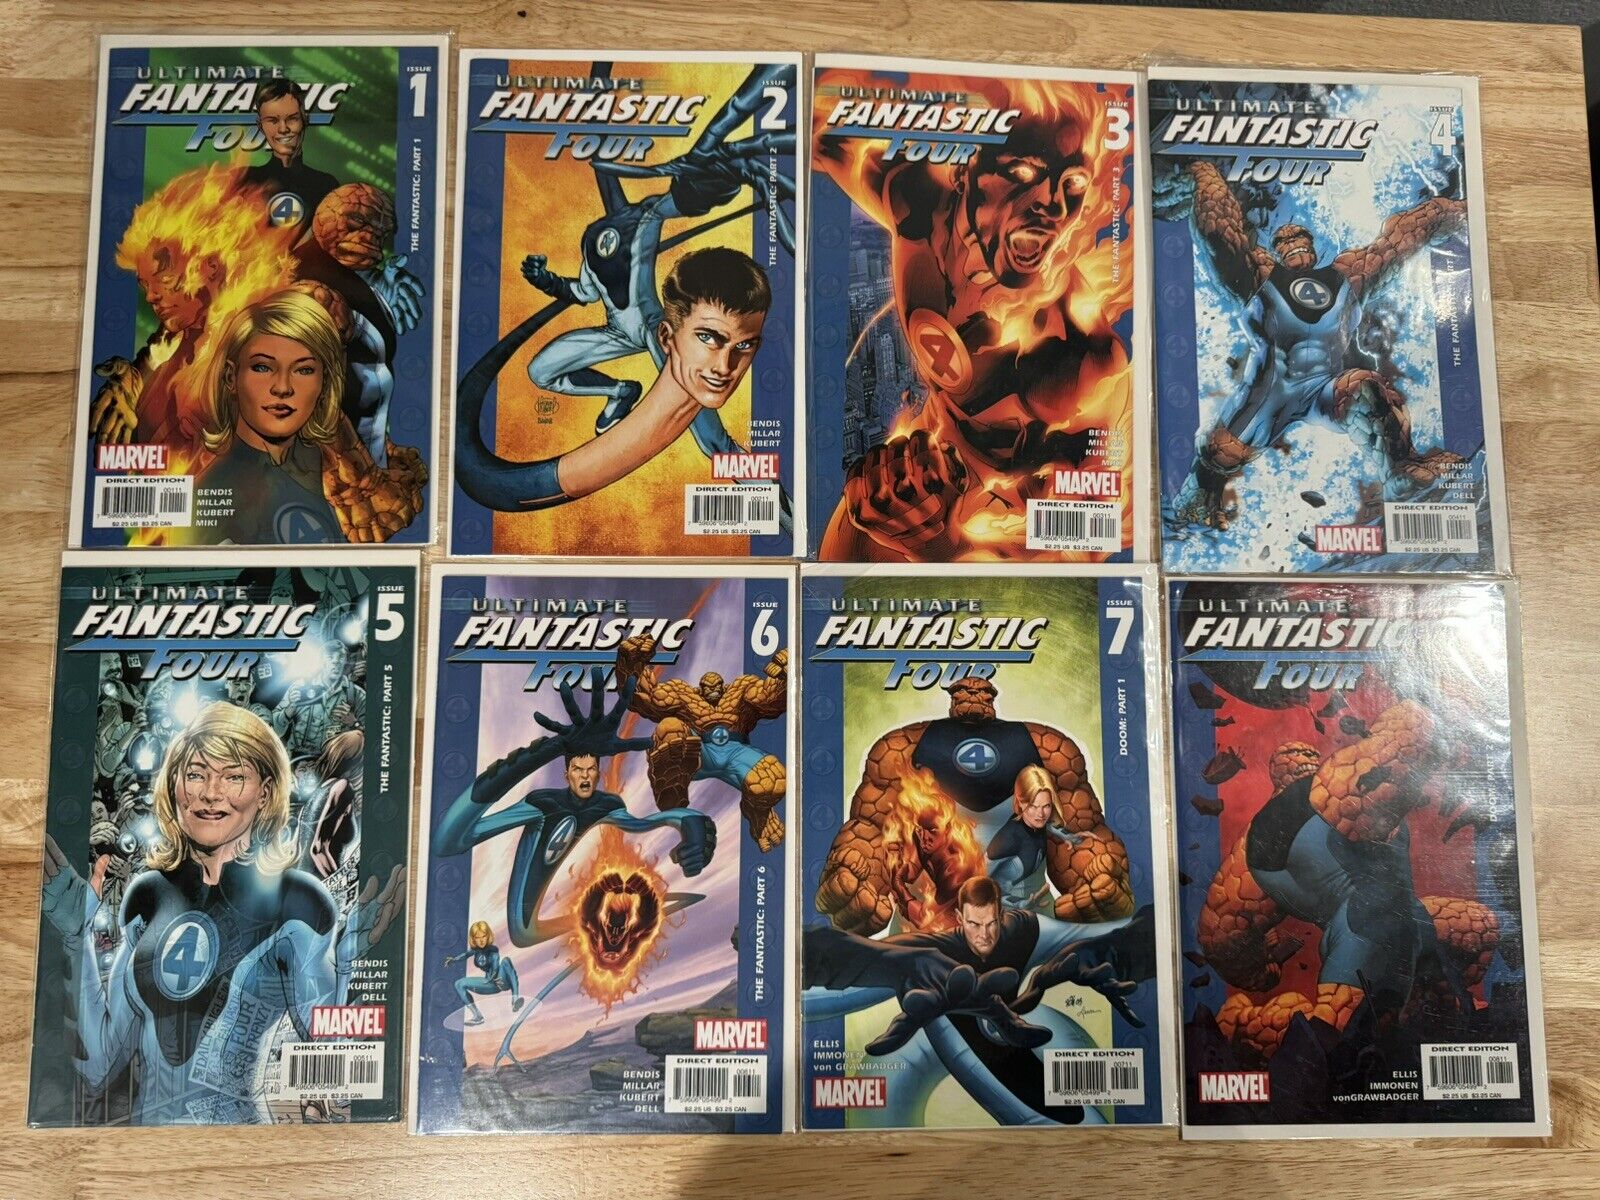 Ultimate Fantastic Four #1 (Marvel Comics September 2004) + 21/22 Marvel Zombies